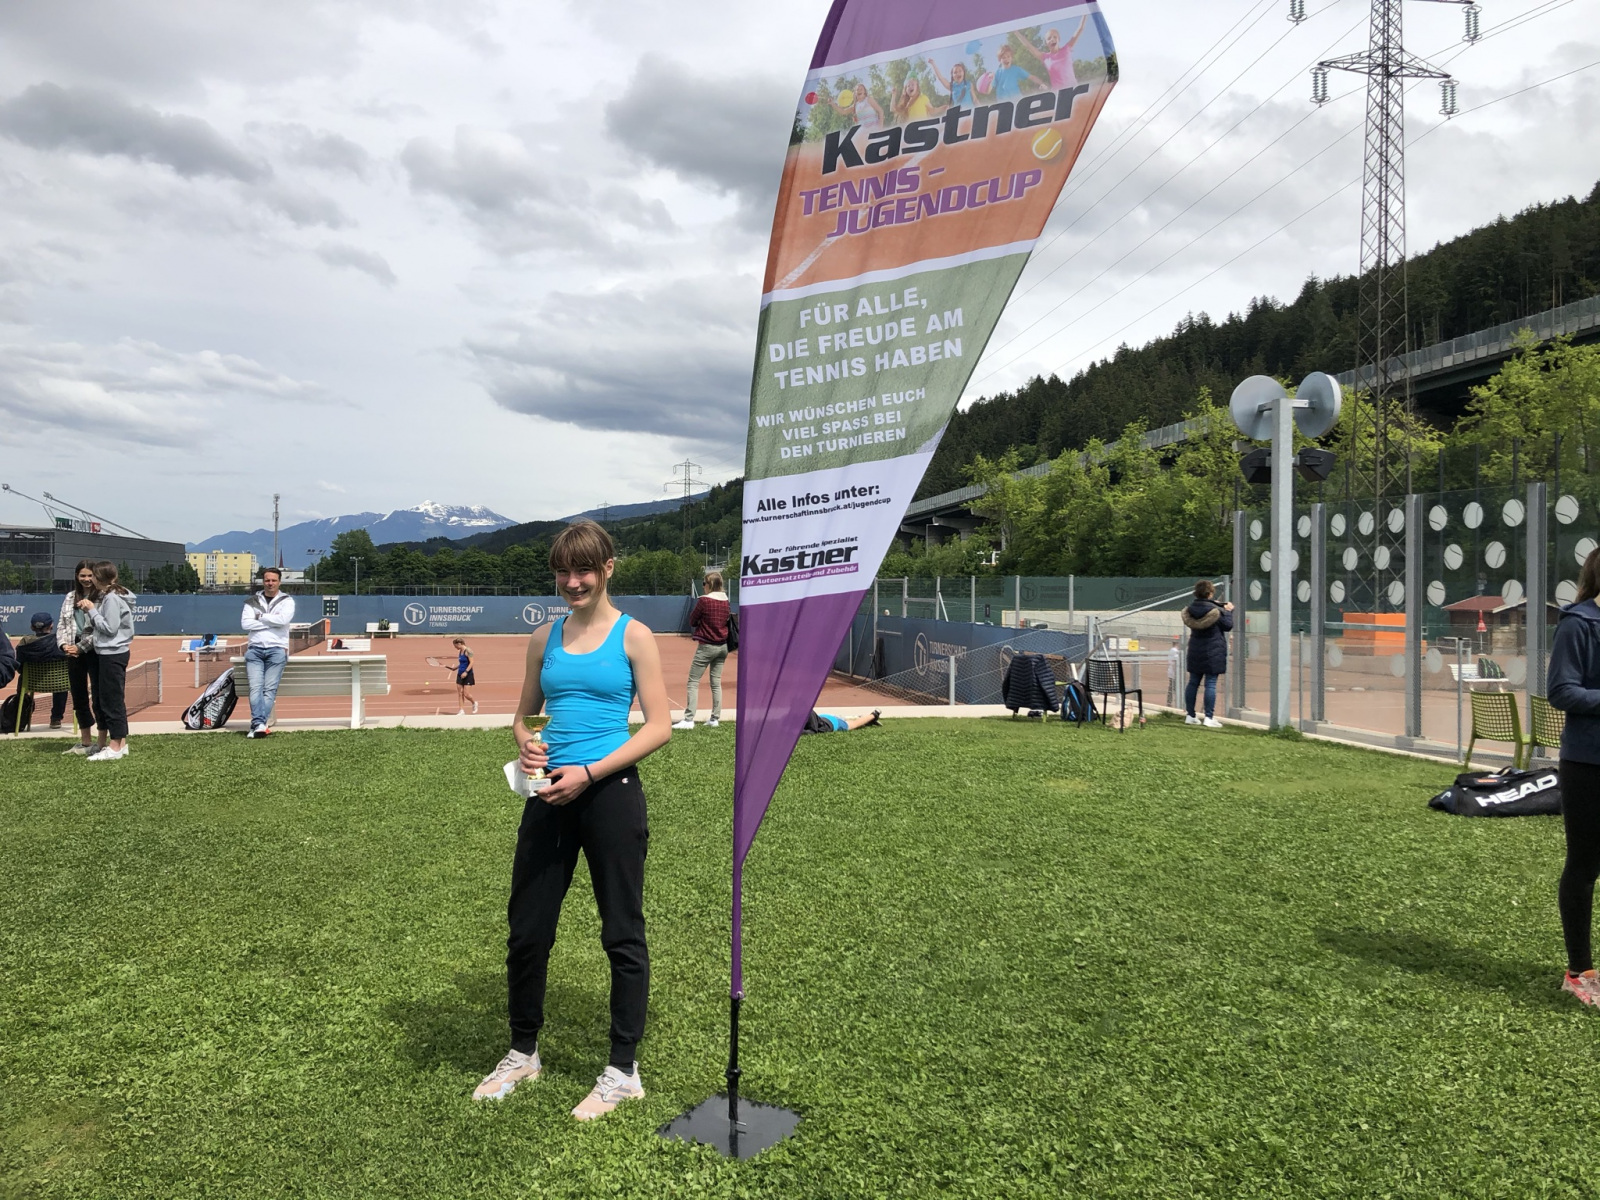 Kastner-Tennis-Jugend-Cup-2021-Turnerschaft-Innsbruck-18